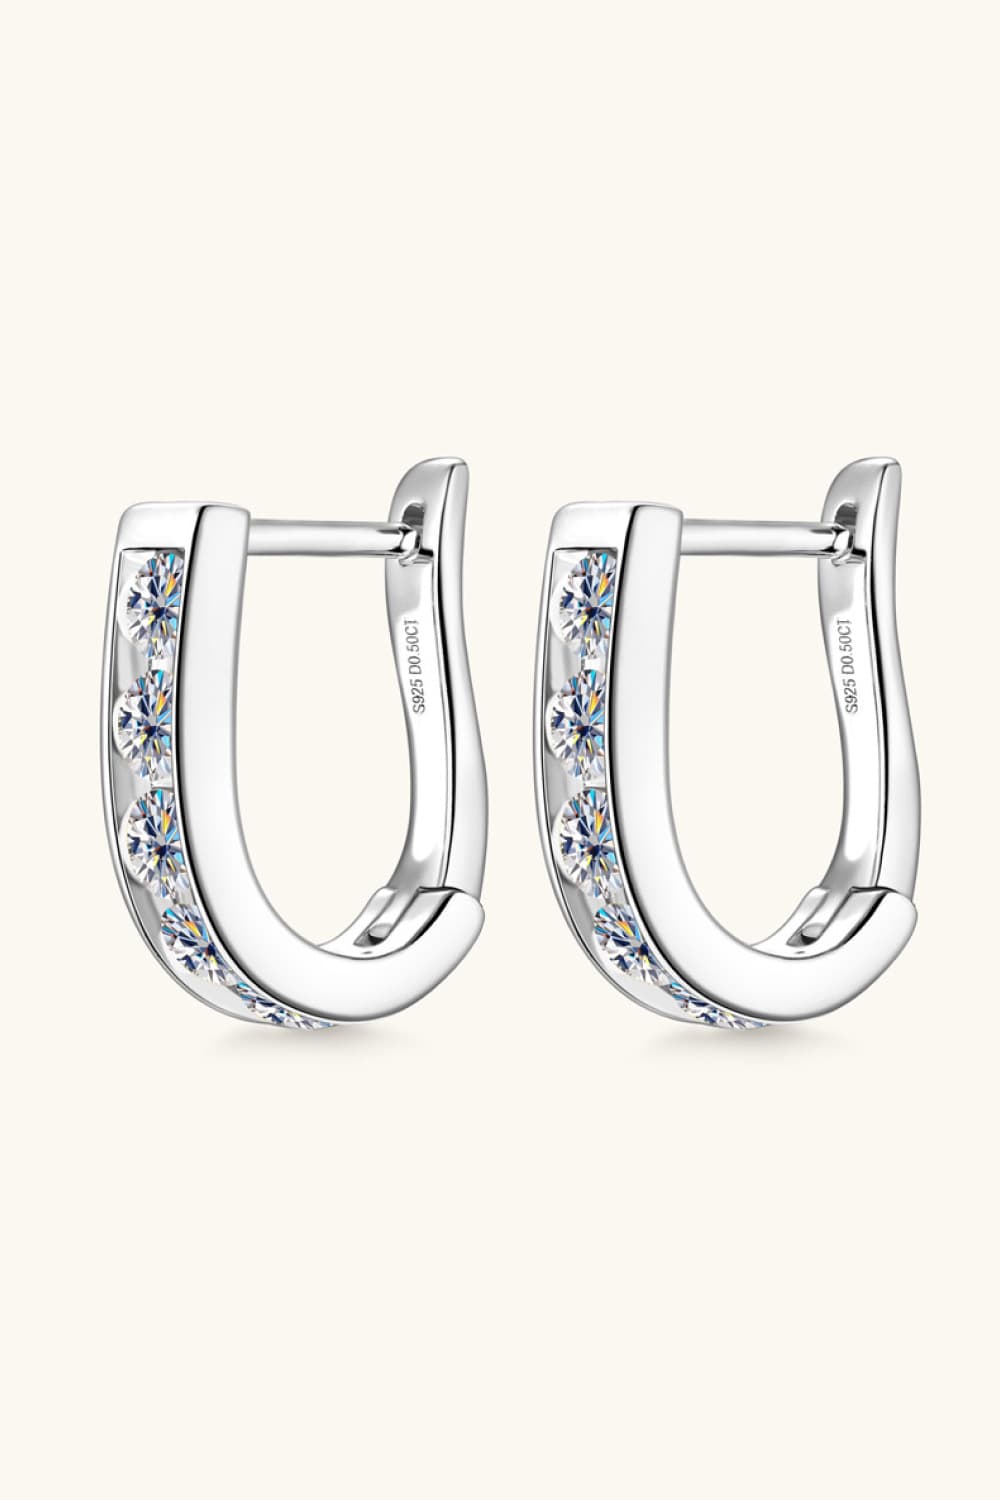 1 Carat Moissanite 925 Sterling Silver Earrings - Nicole Lee Apparel